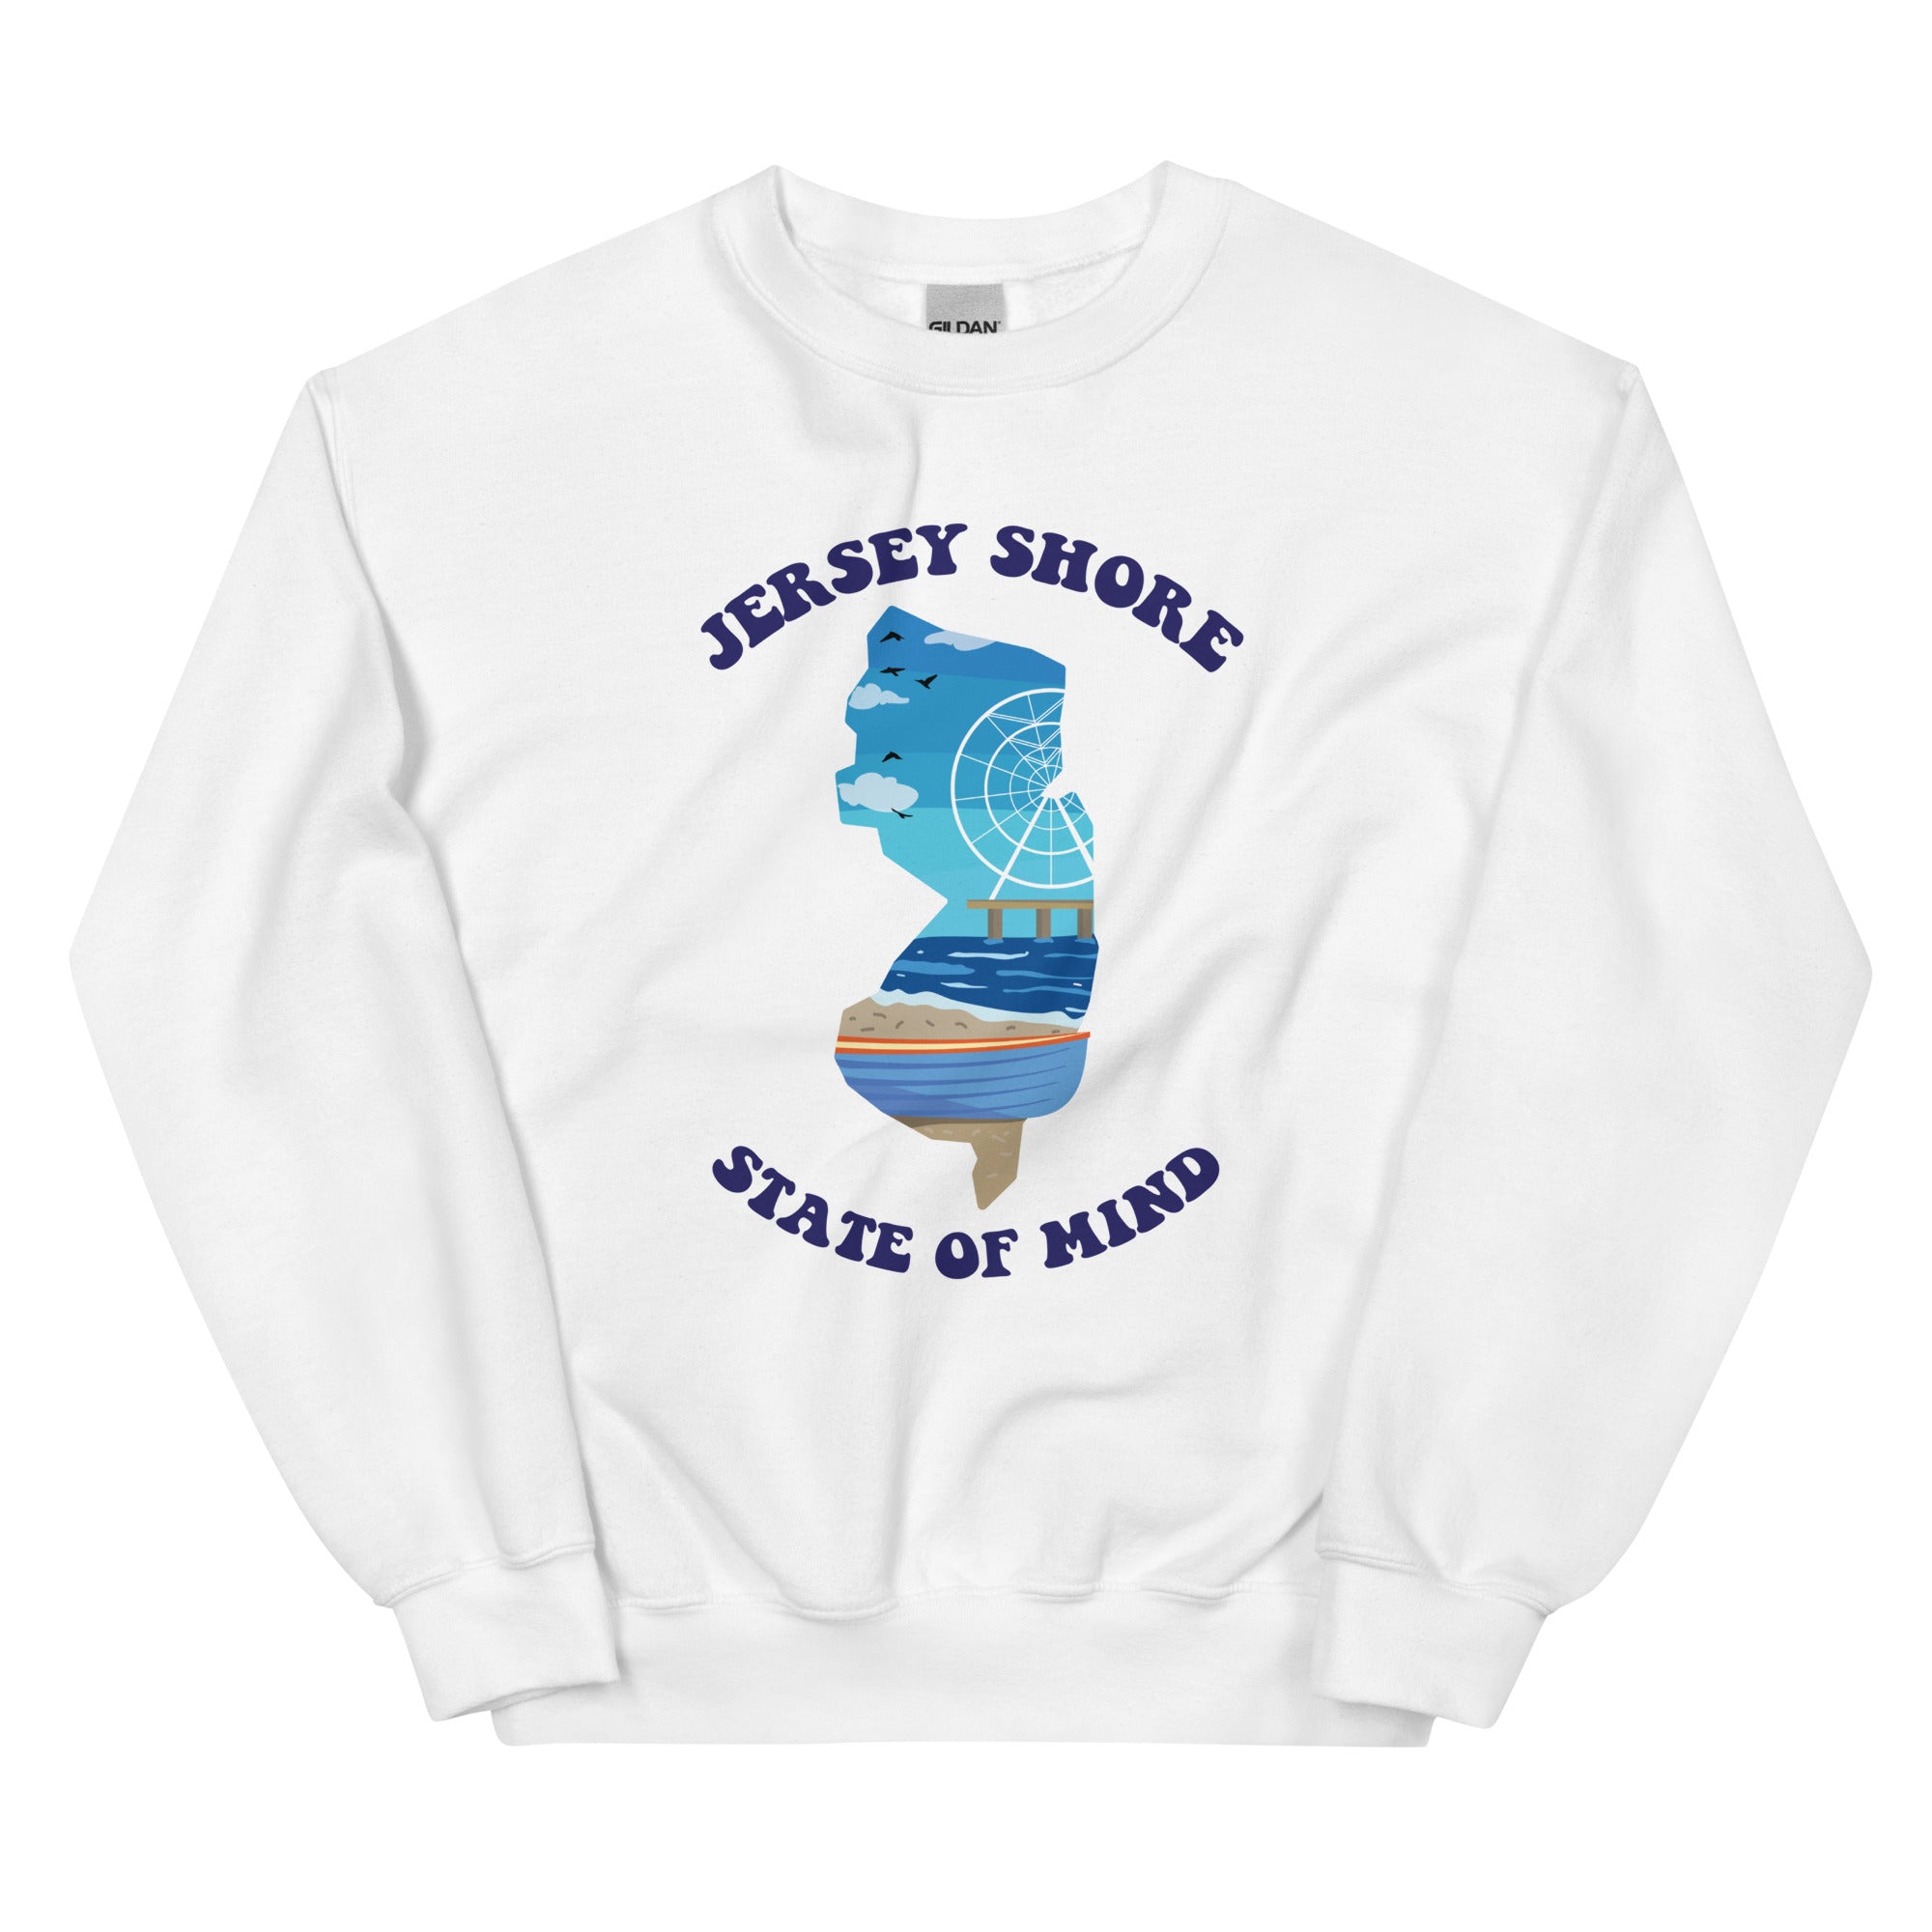 "Jersey Shore State of Mind" Sweatshirt